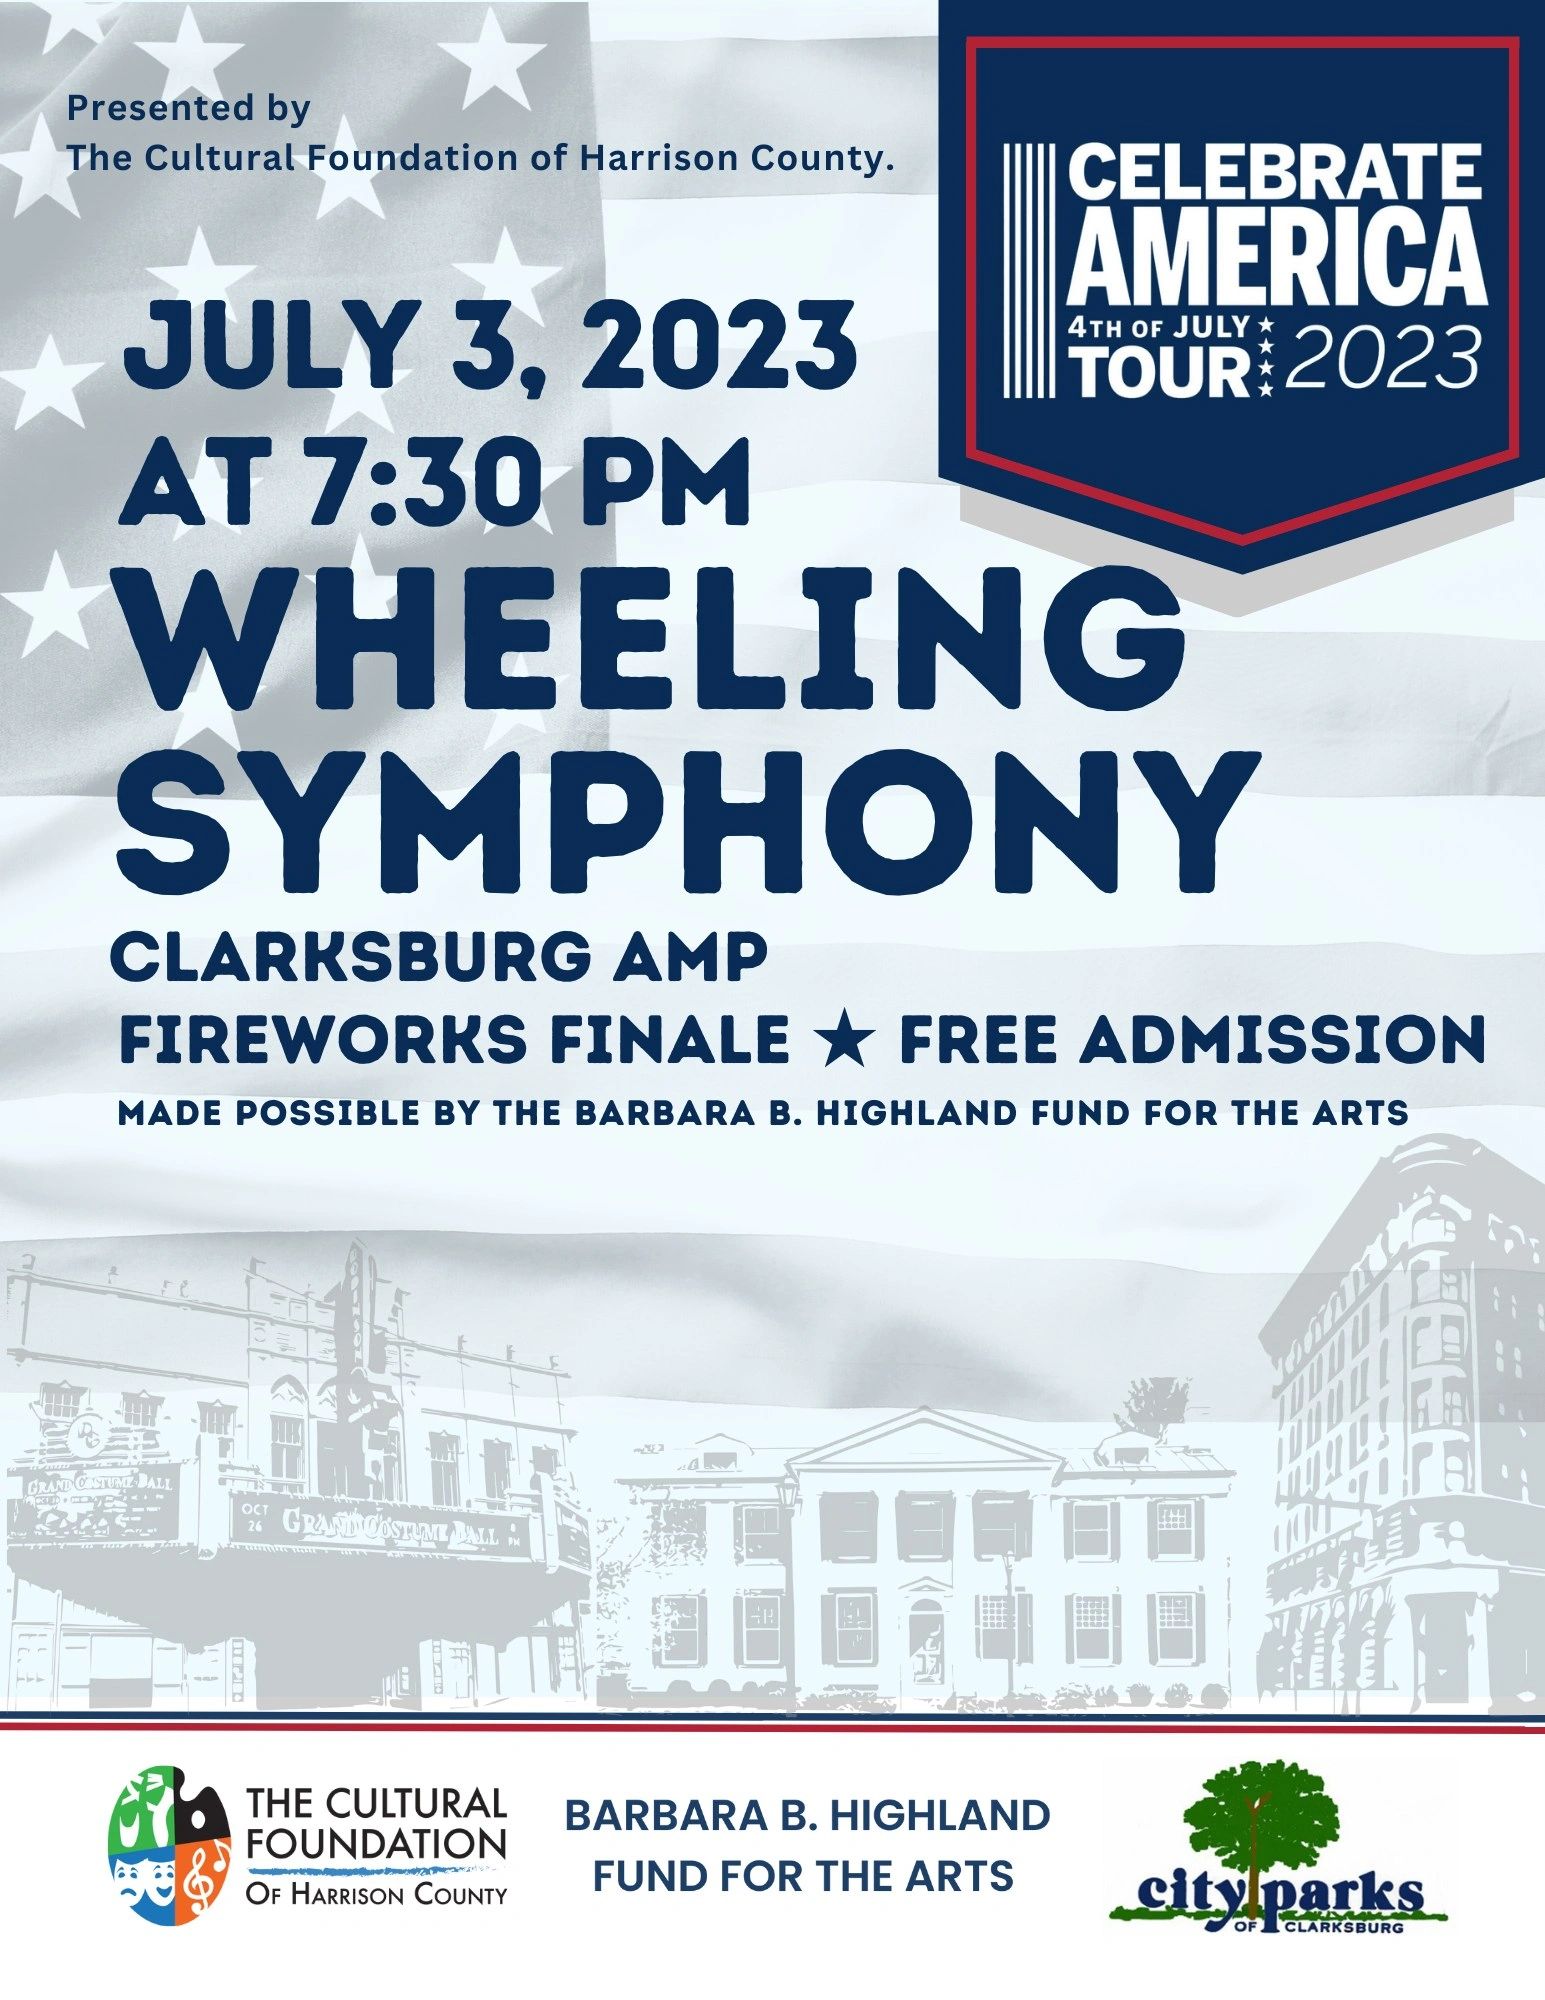 Wheeling Symphony Clarksburg Amphitheater